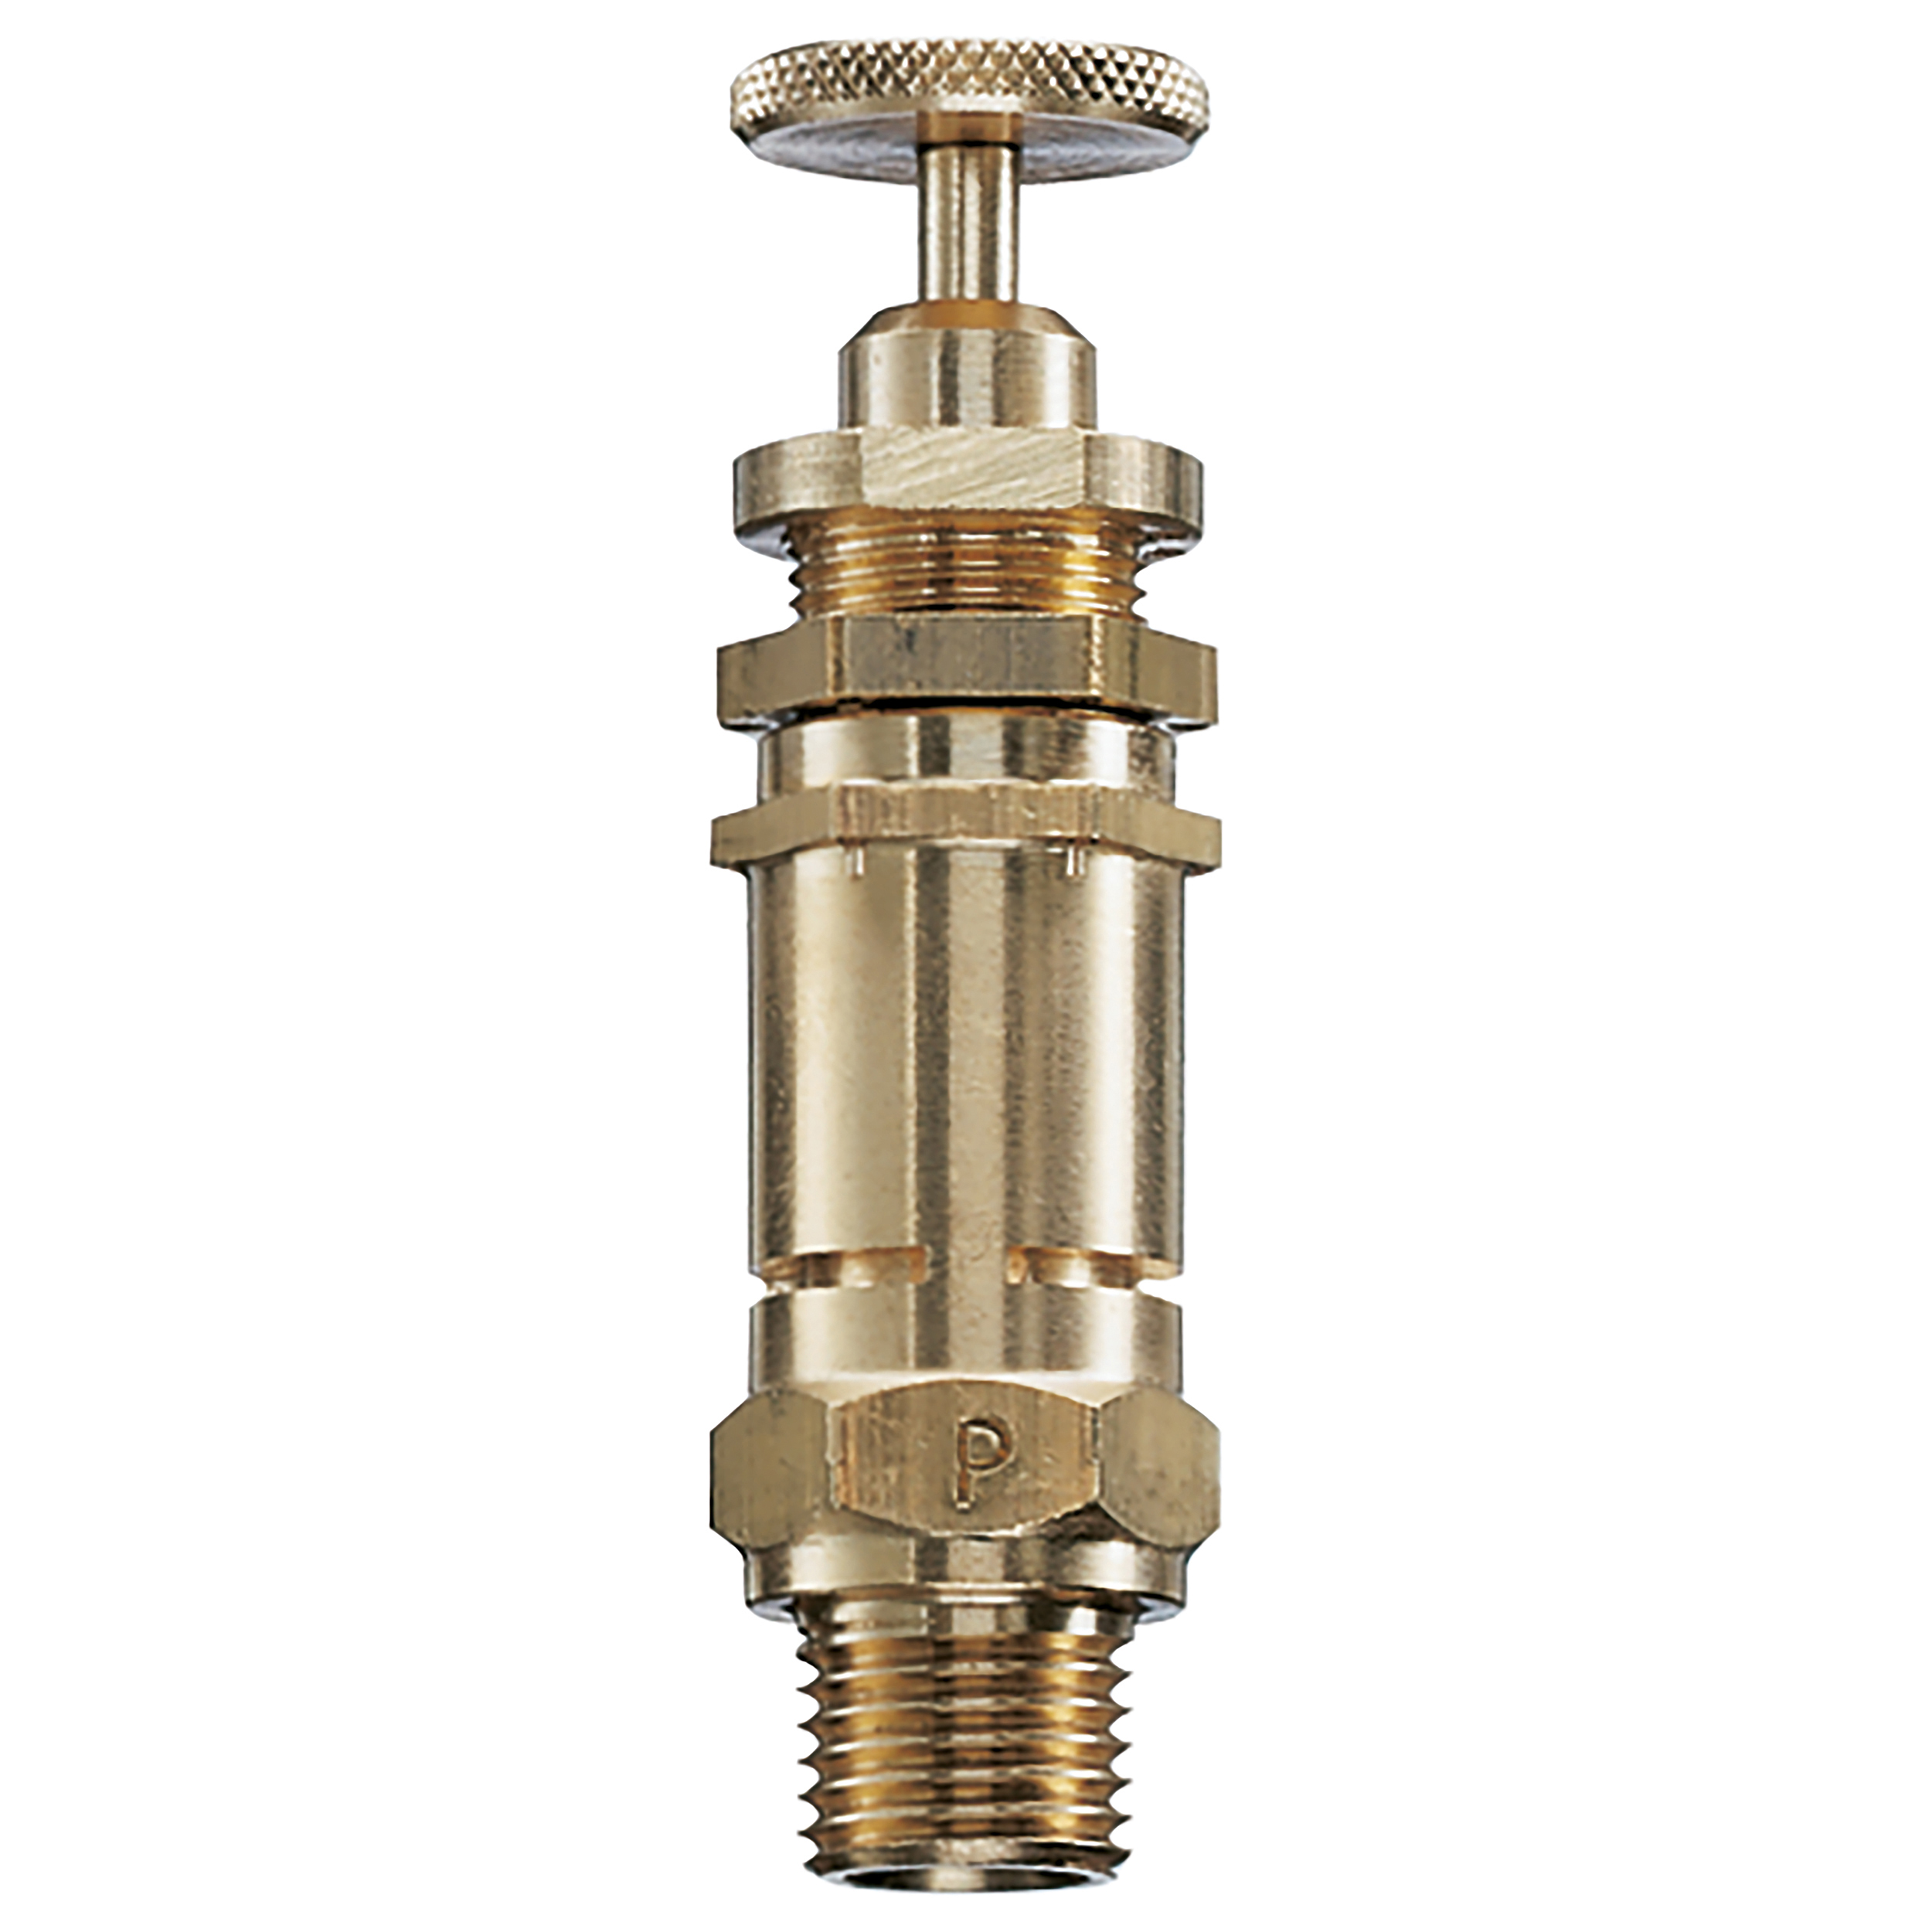 Classic blow-off valve DN 6, G¼, metall, pressure: 1,5-4 bar